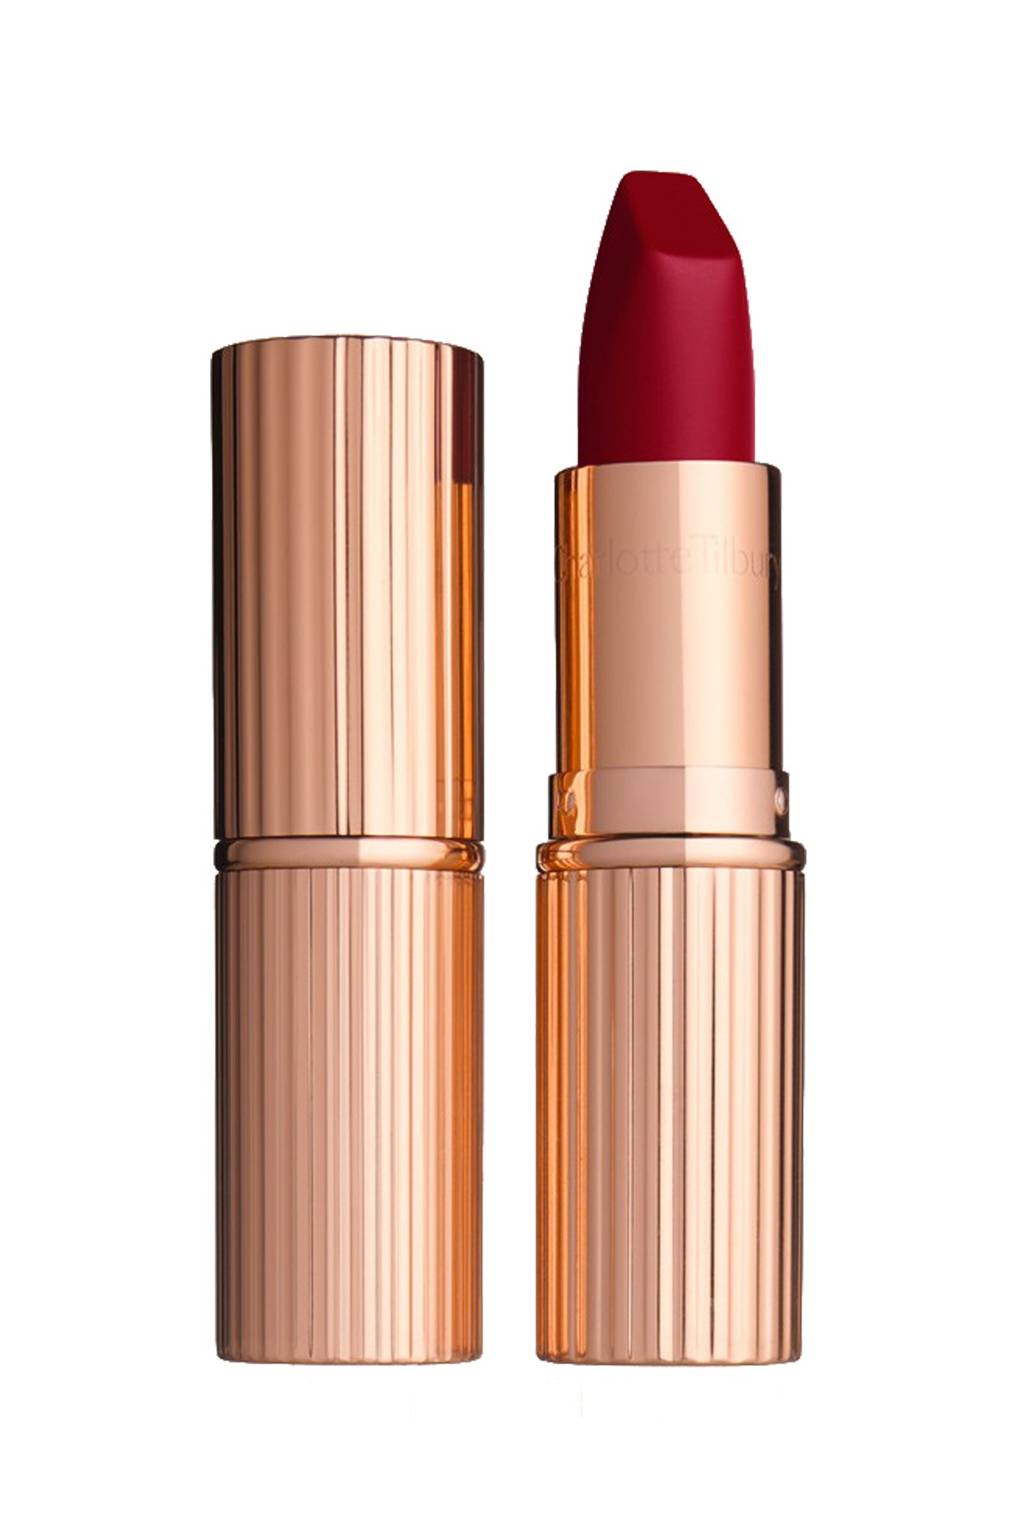 charlotte-tilbury-red-lipstick-beauty-vogue-12april16 b